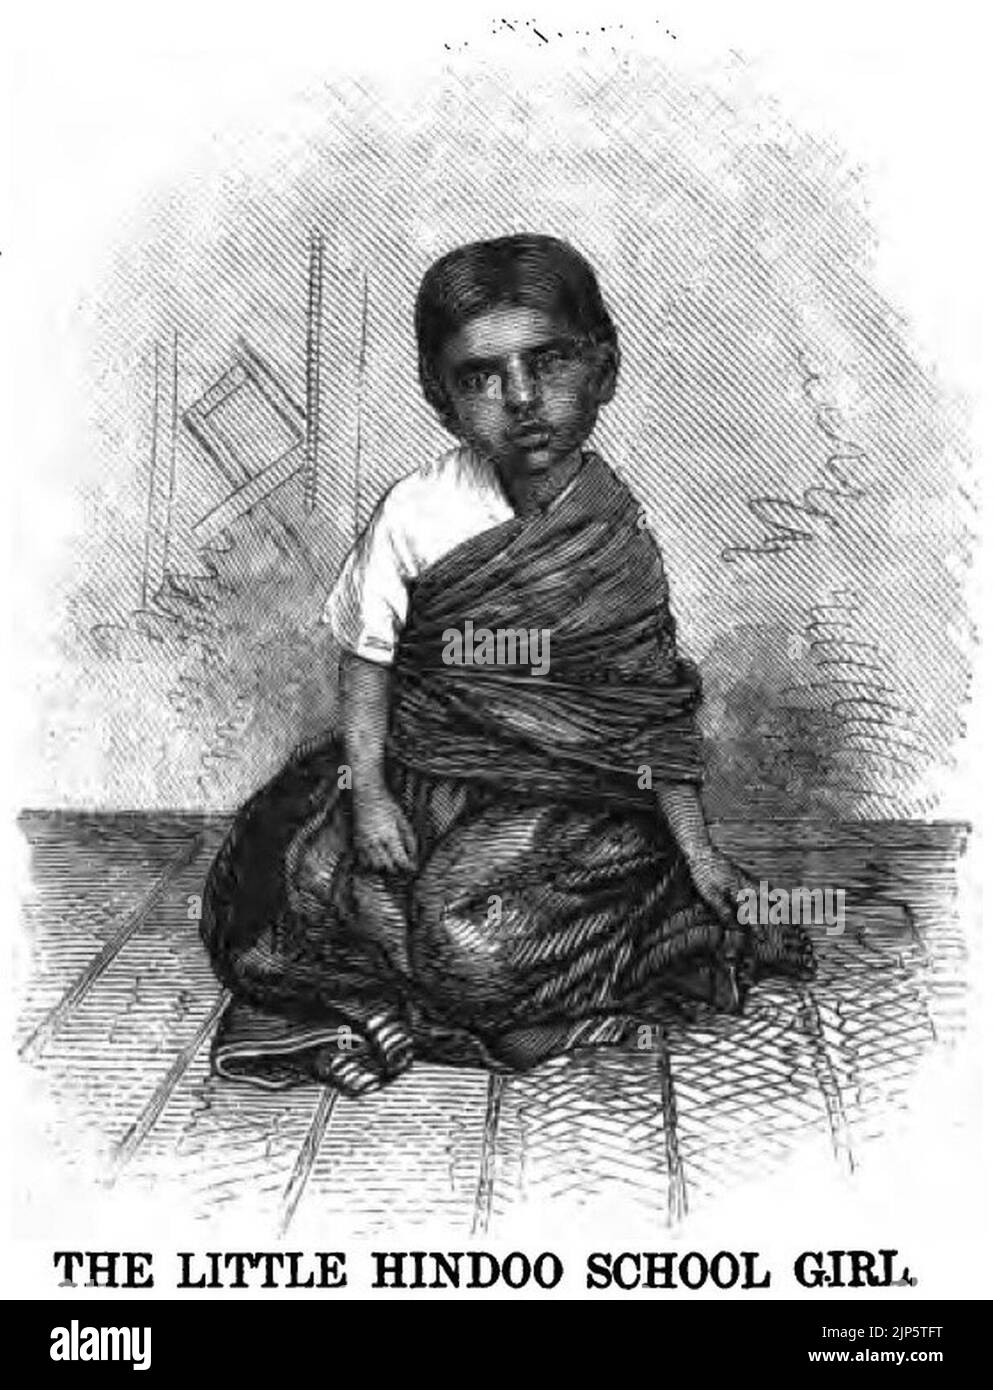 The Little Hindoo School Girl (p.81, giugno 1866, Sarah Sanderson - 22 marzo 1866, Leeds) - Copia Foto Stock